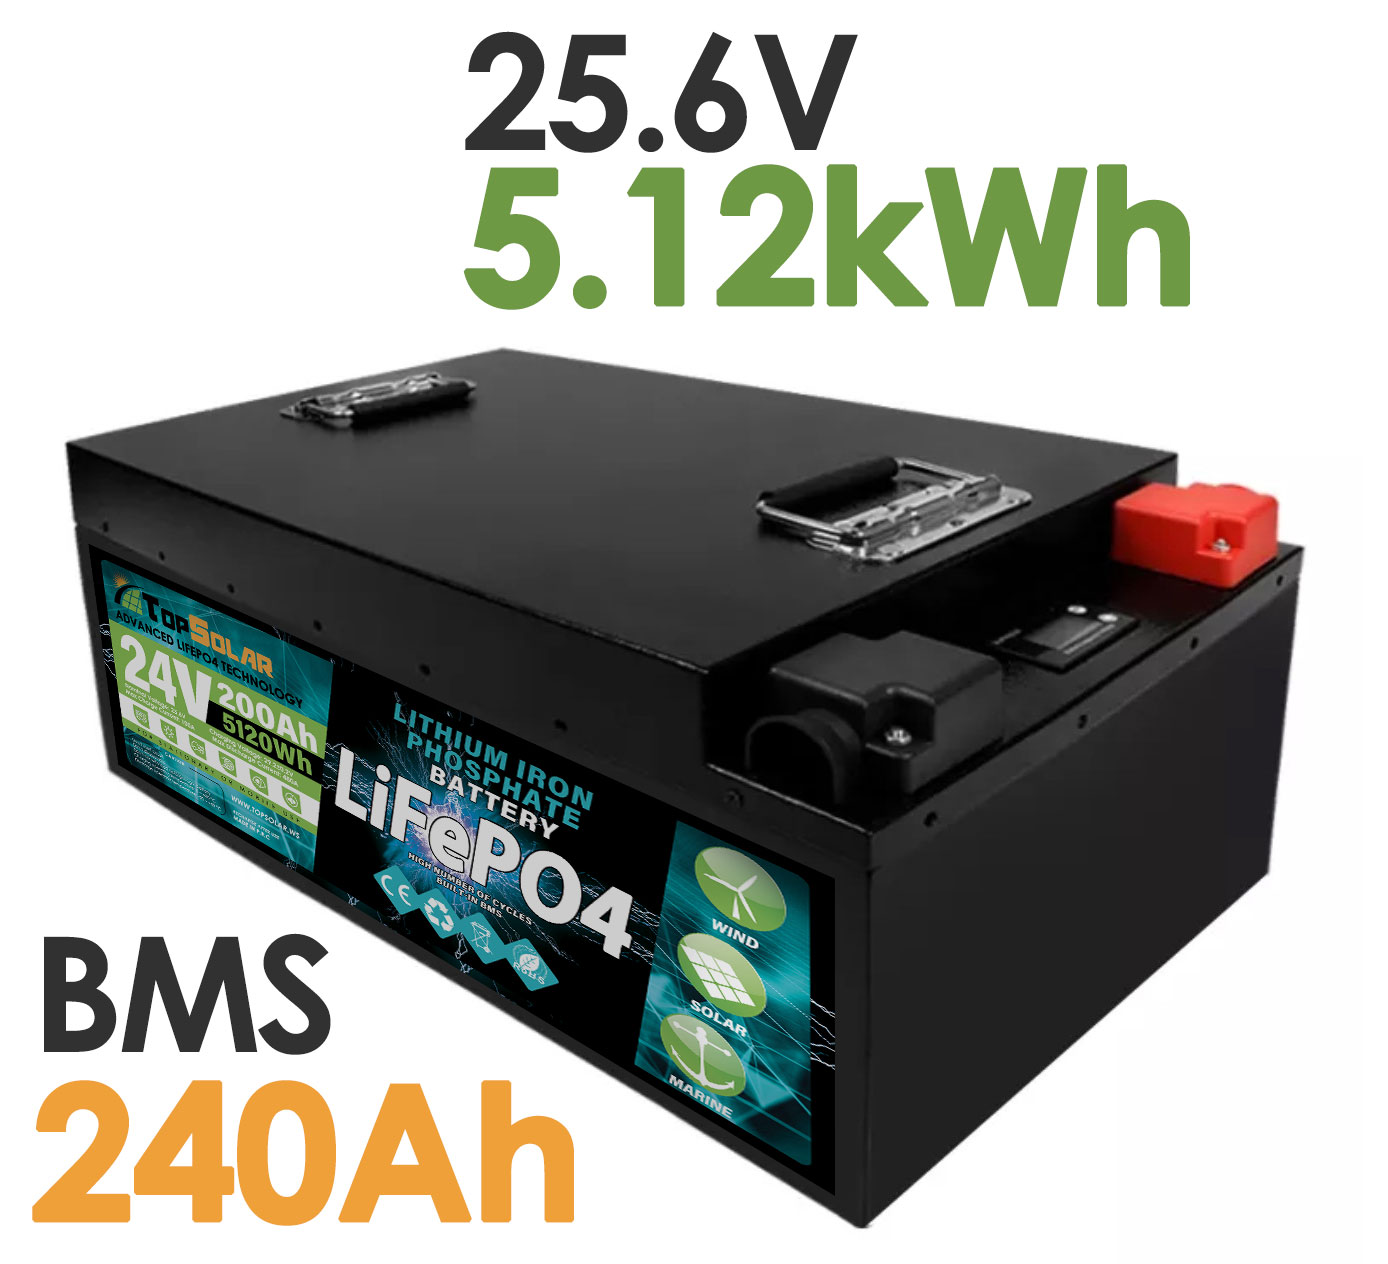 TopSolar Lithium Battery 5,12kWh LiFePO4 24V 200Ah 25,6V Integrated BMS  240AH Smart #N51120050965